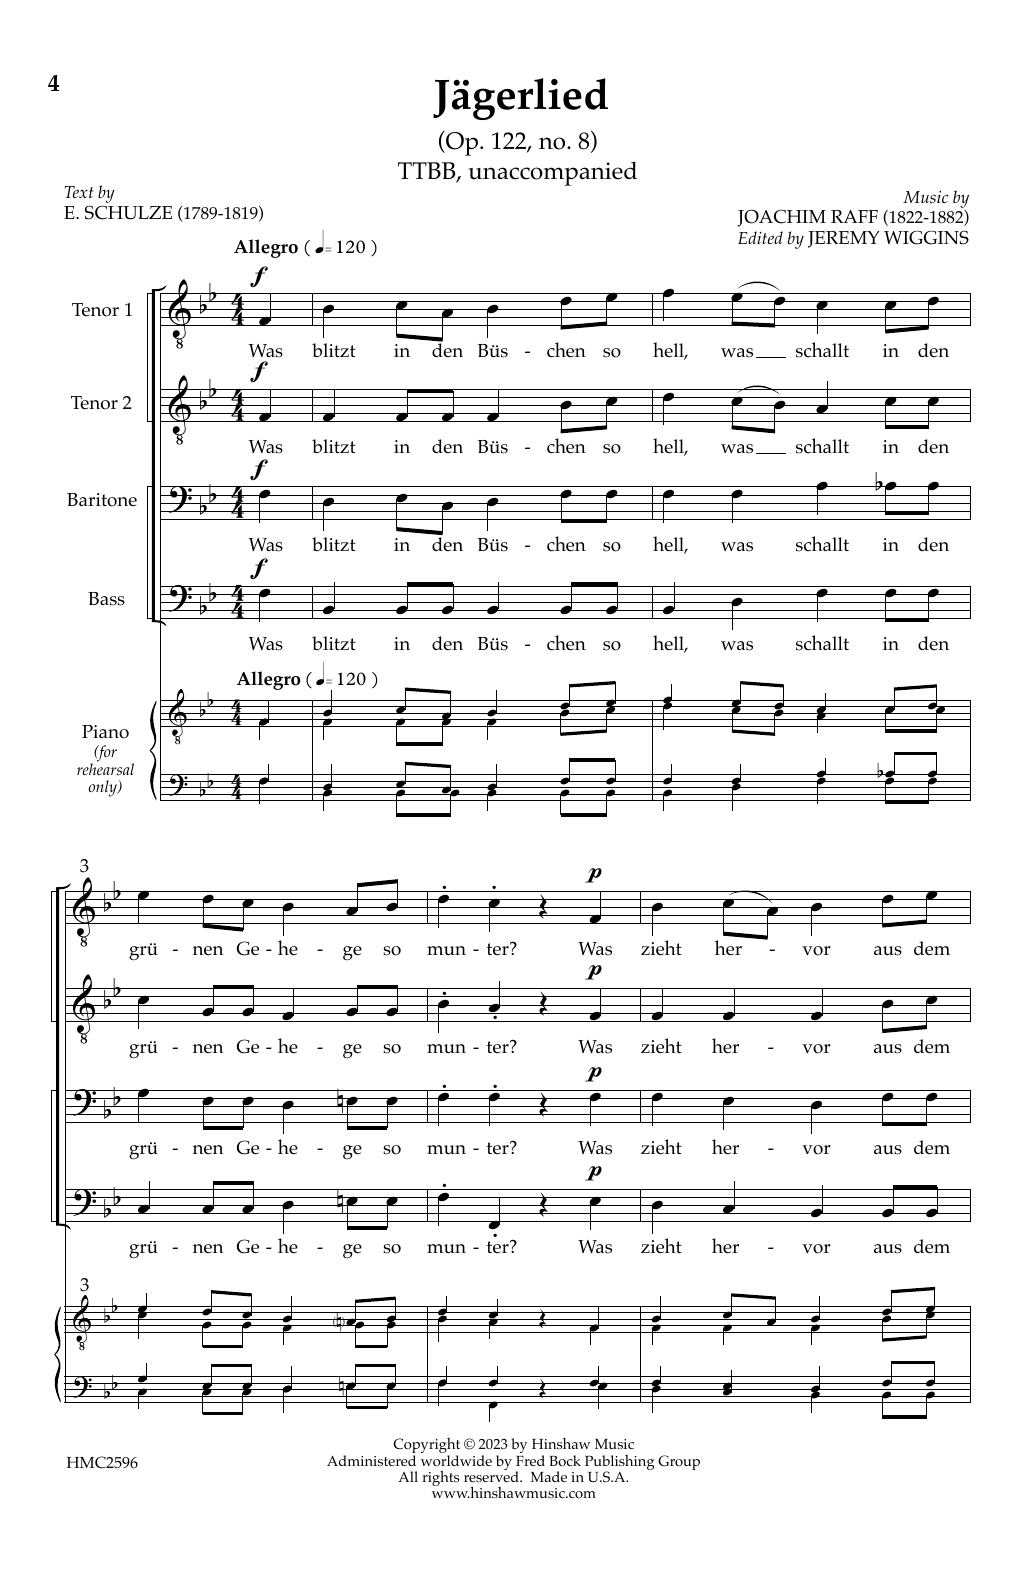 Jeremy Wiggins Jägerlied Sheet Music Notes & Chords for TTBB Choir - Download or Print PDF